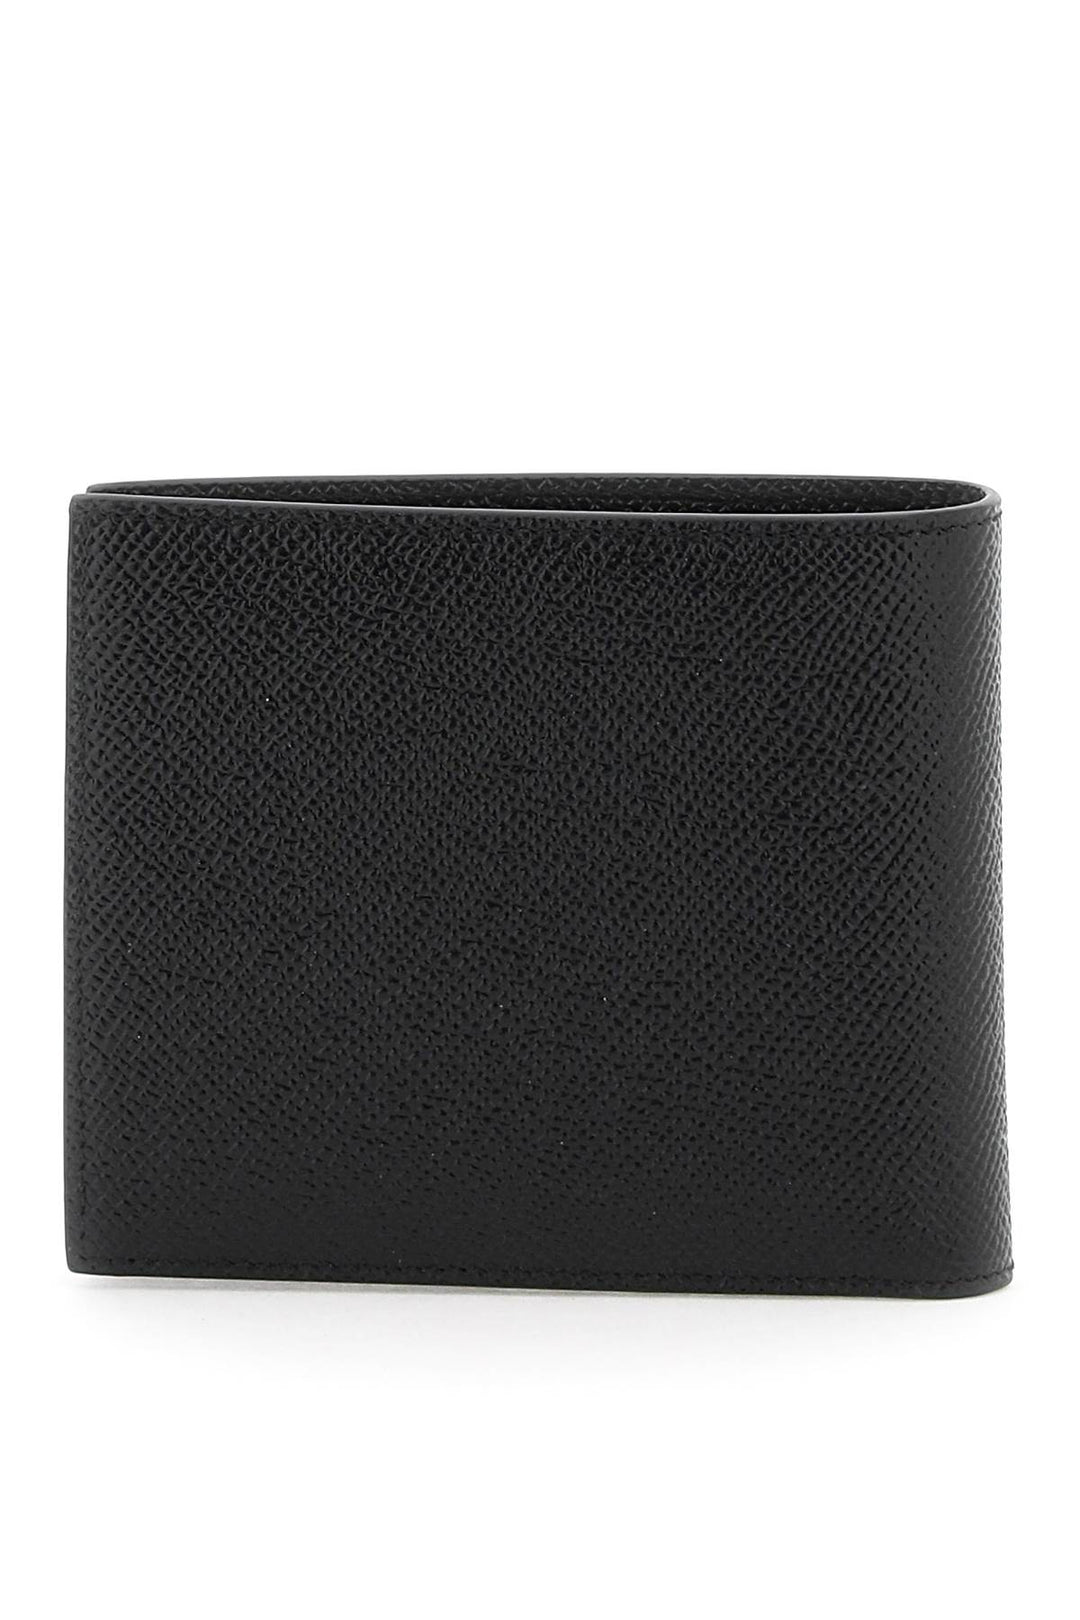 Dolce & Gabbana Leather Wallet   Nero